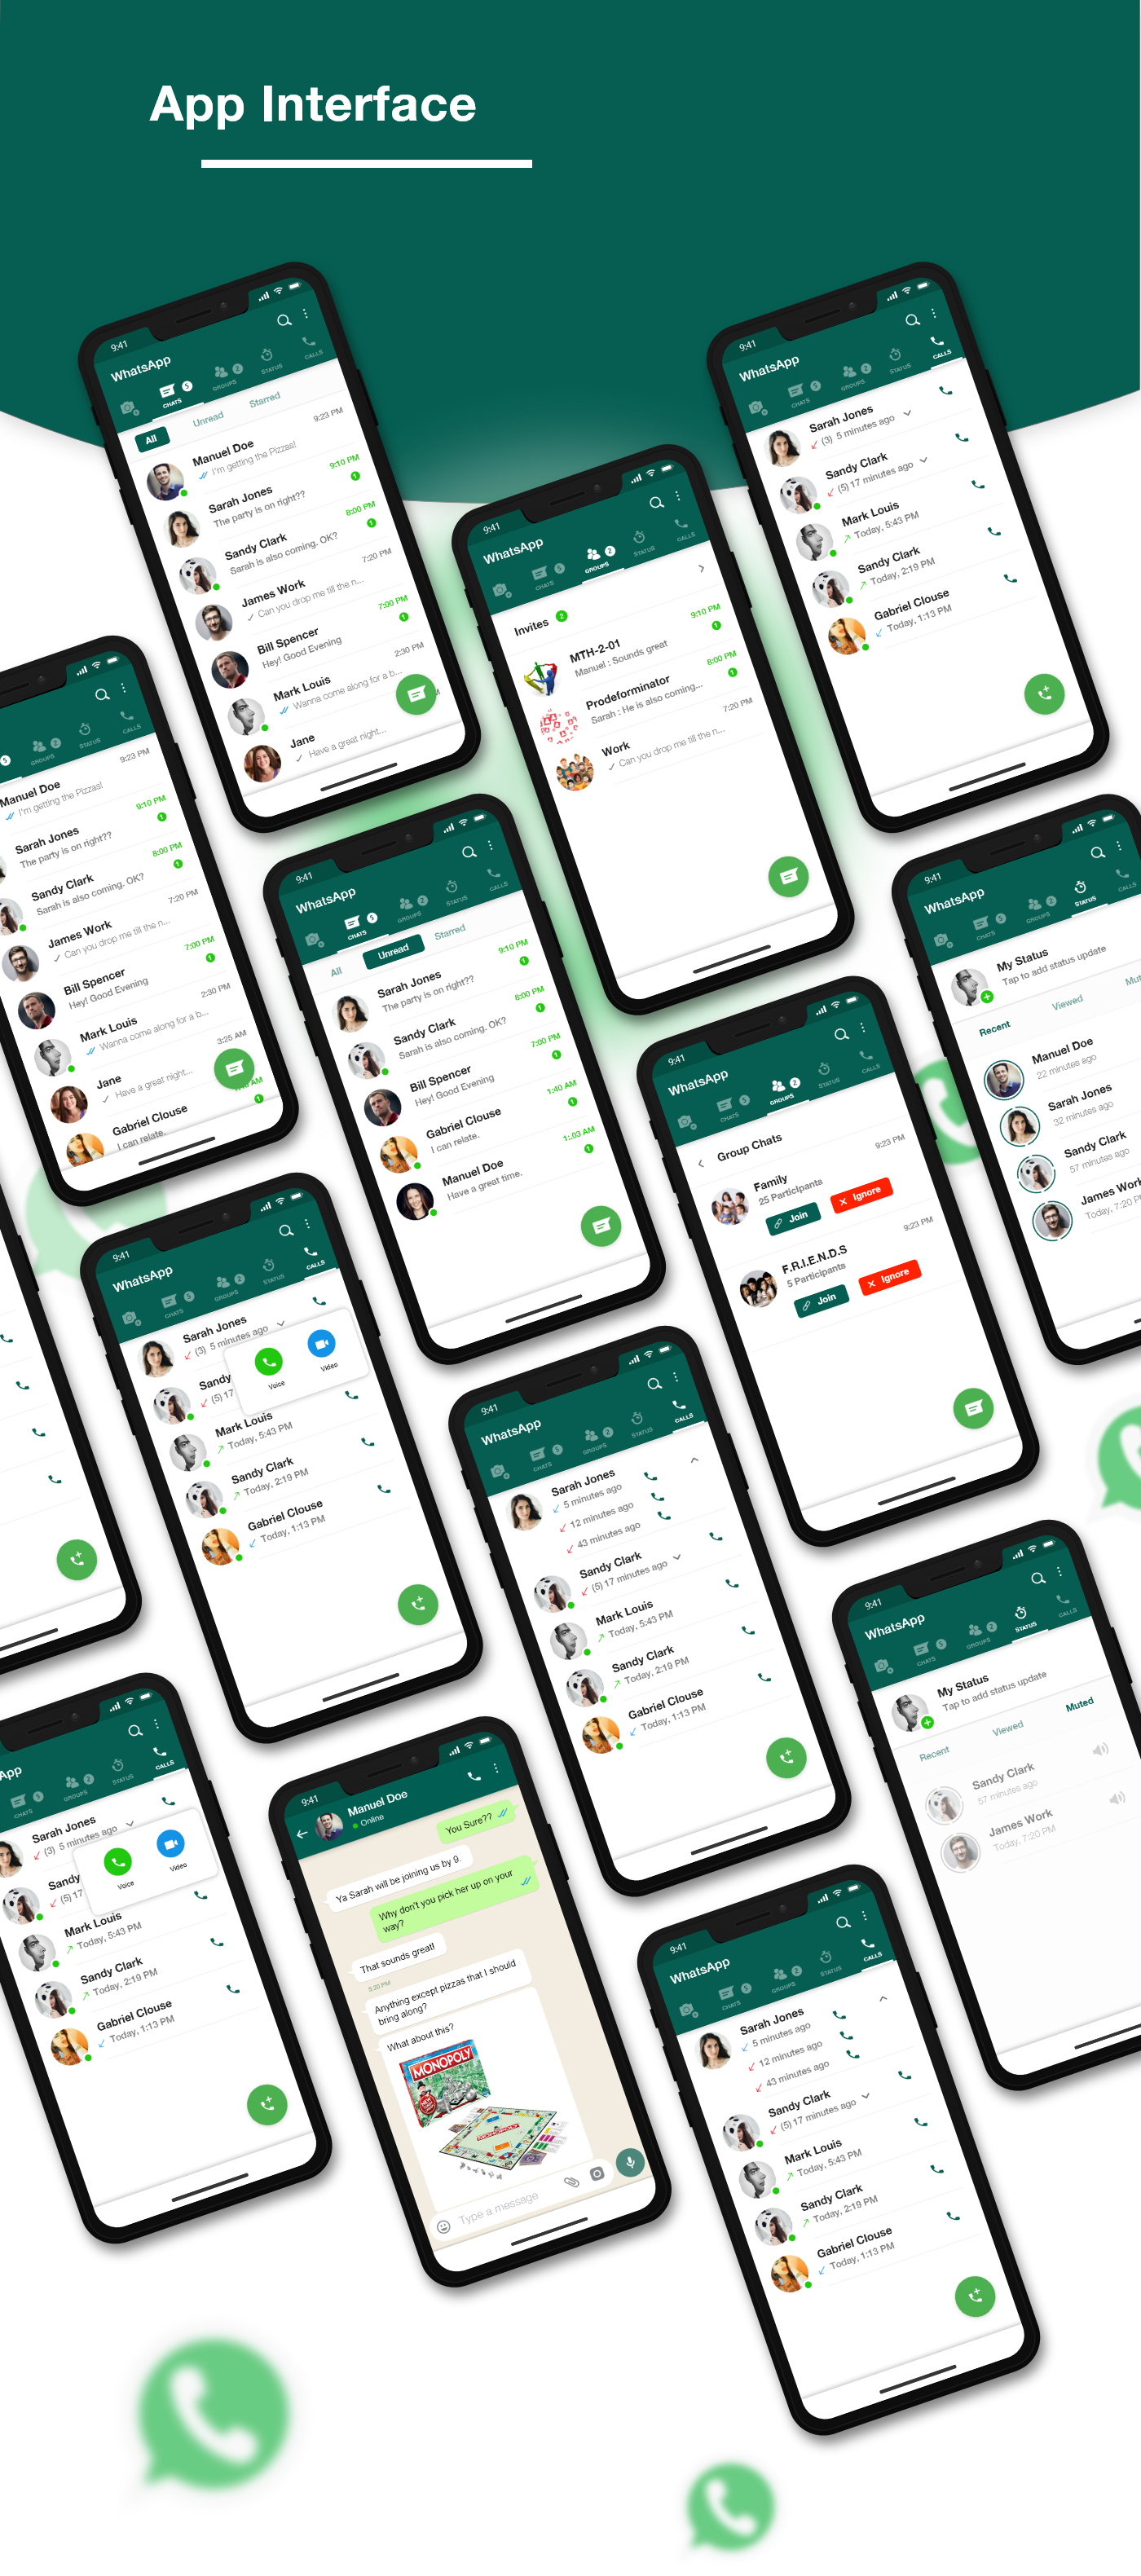 UI ux WhatsApp app android Chat Interaction design  UX design design freebie